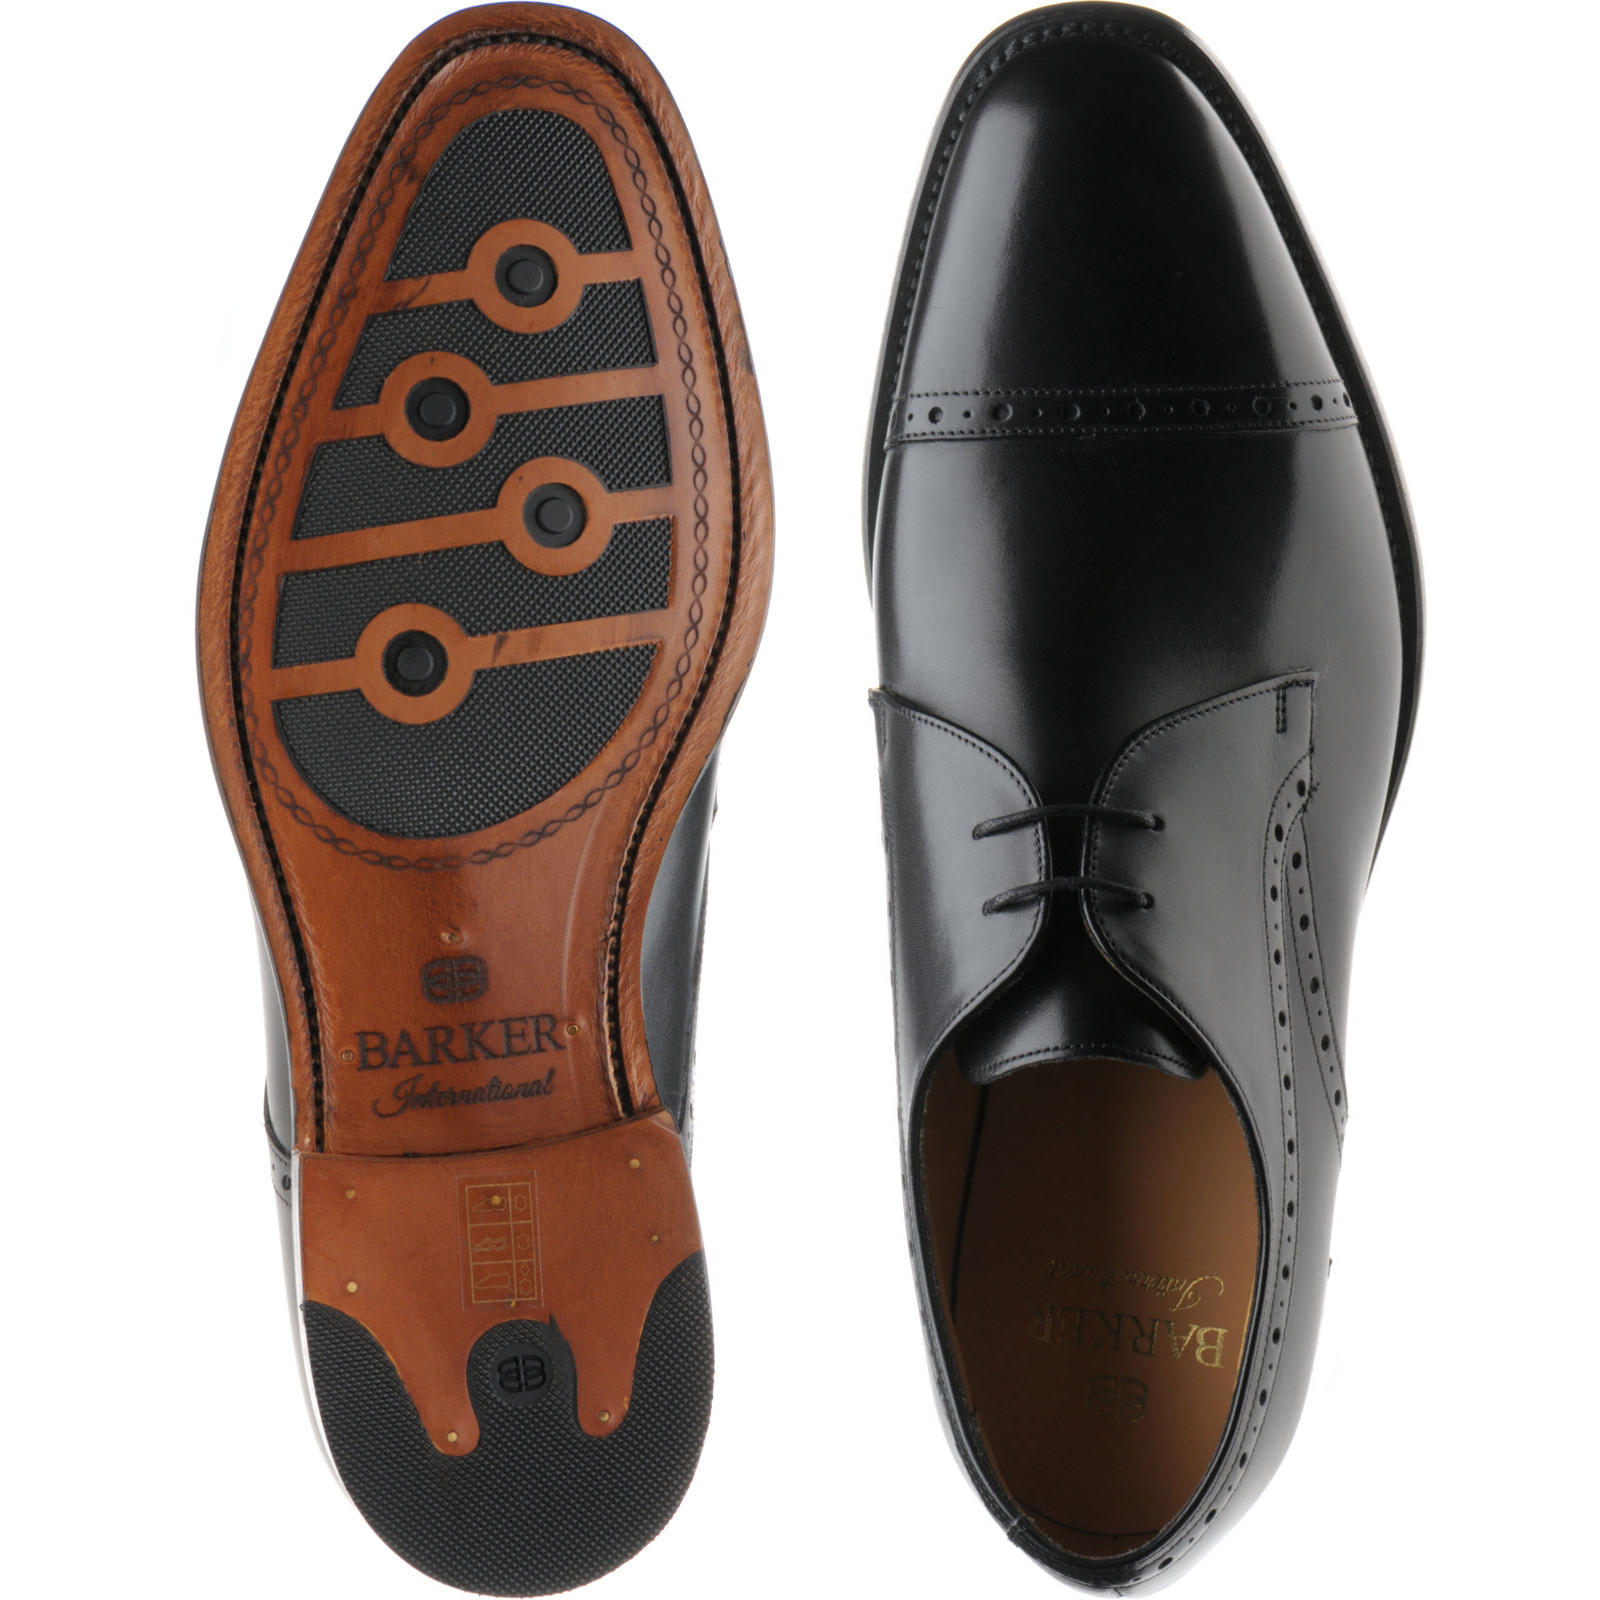 Barker shoes | Barker International | Wye in Black Calf at Herring Shoes